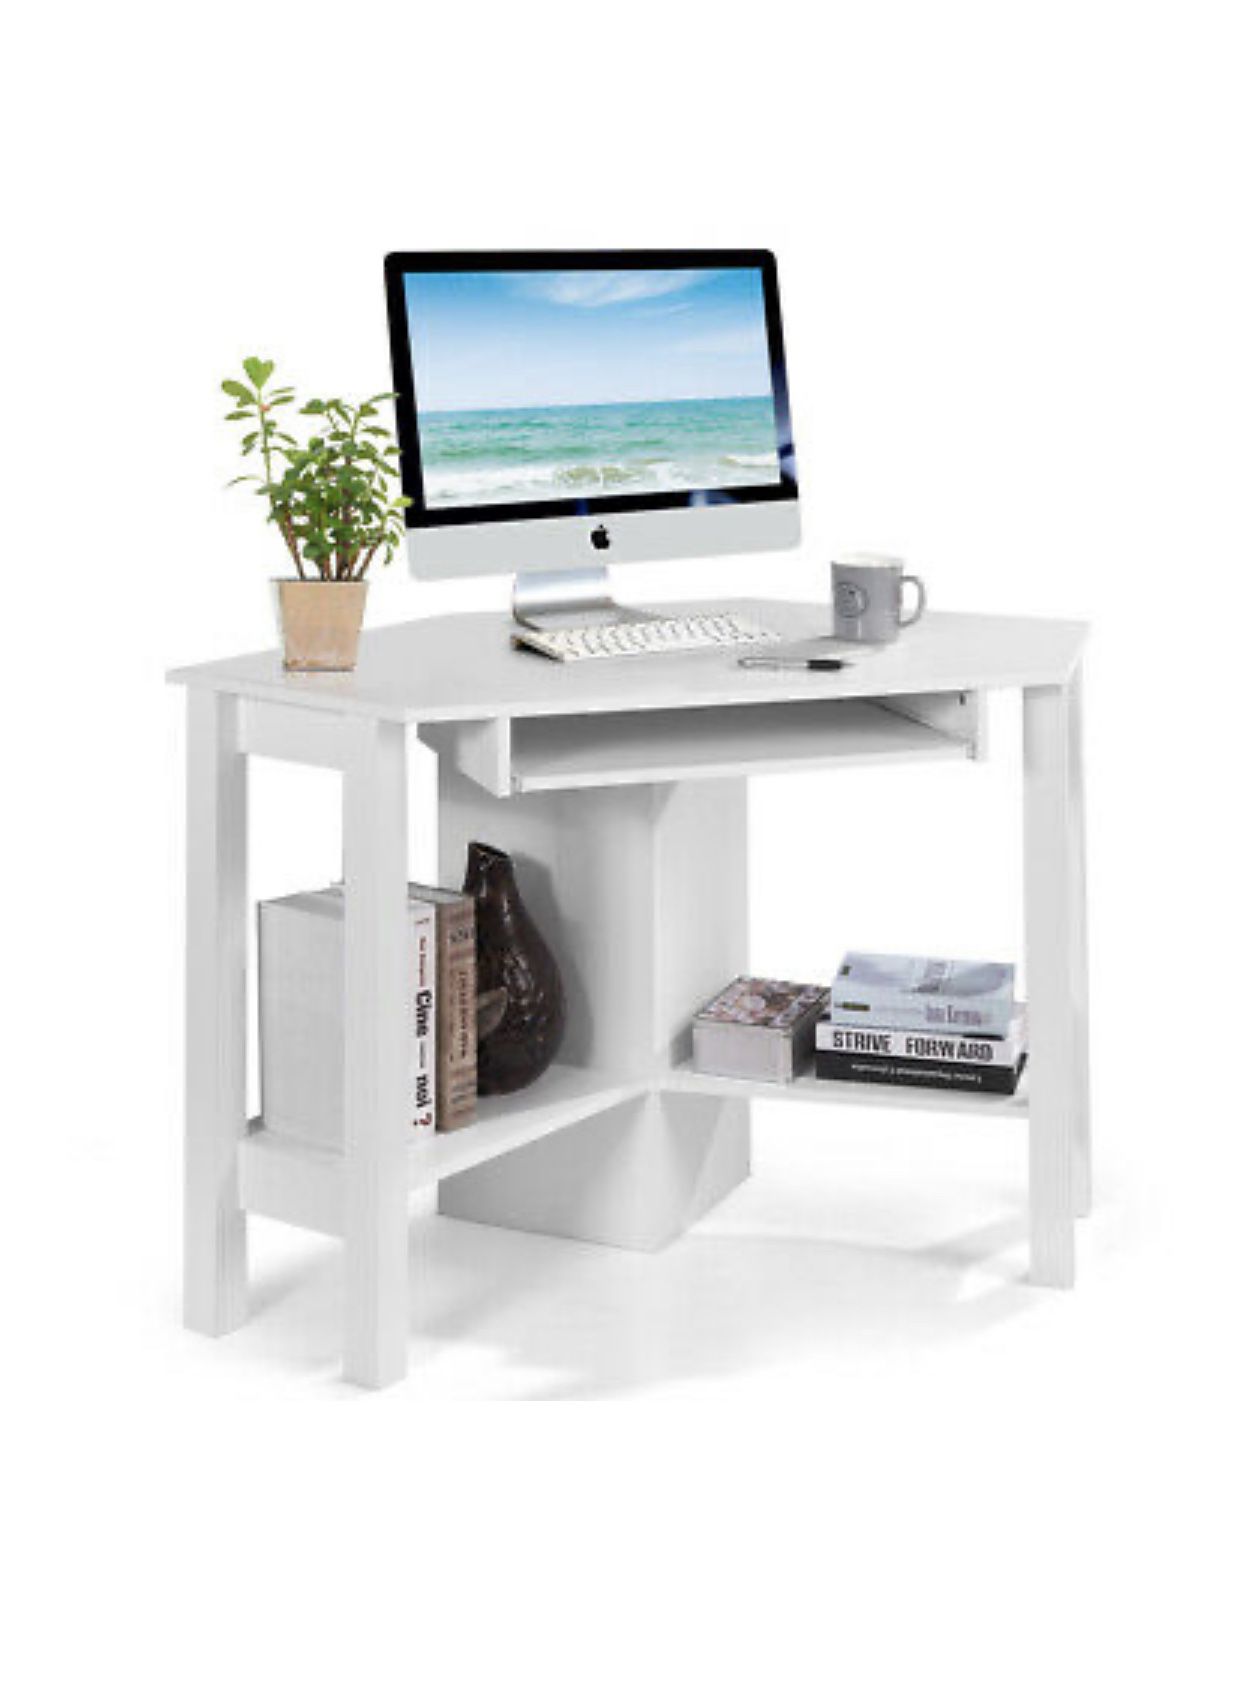 Brand new corner computer desk!